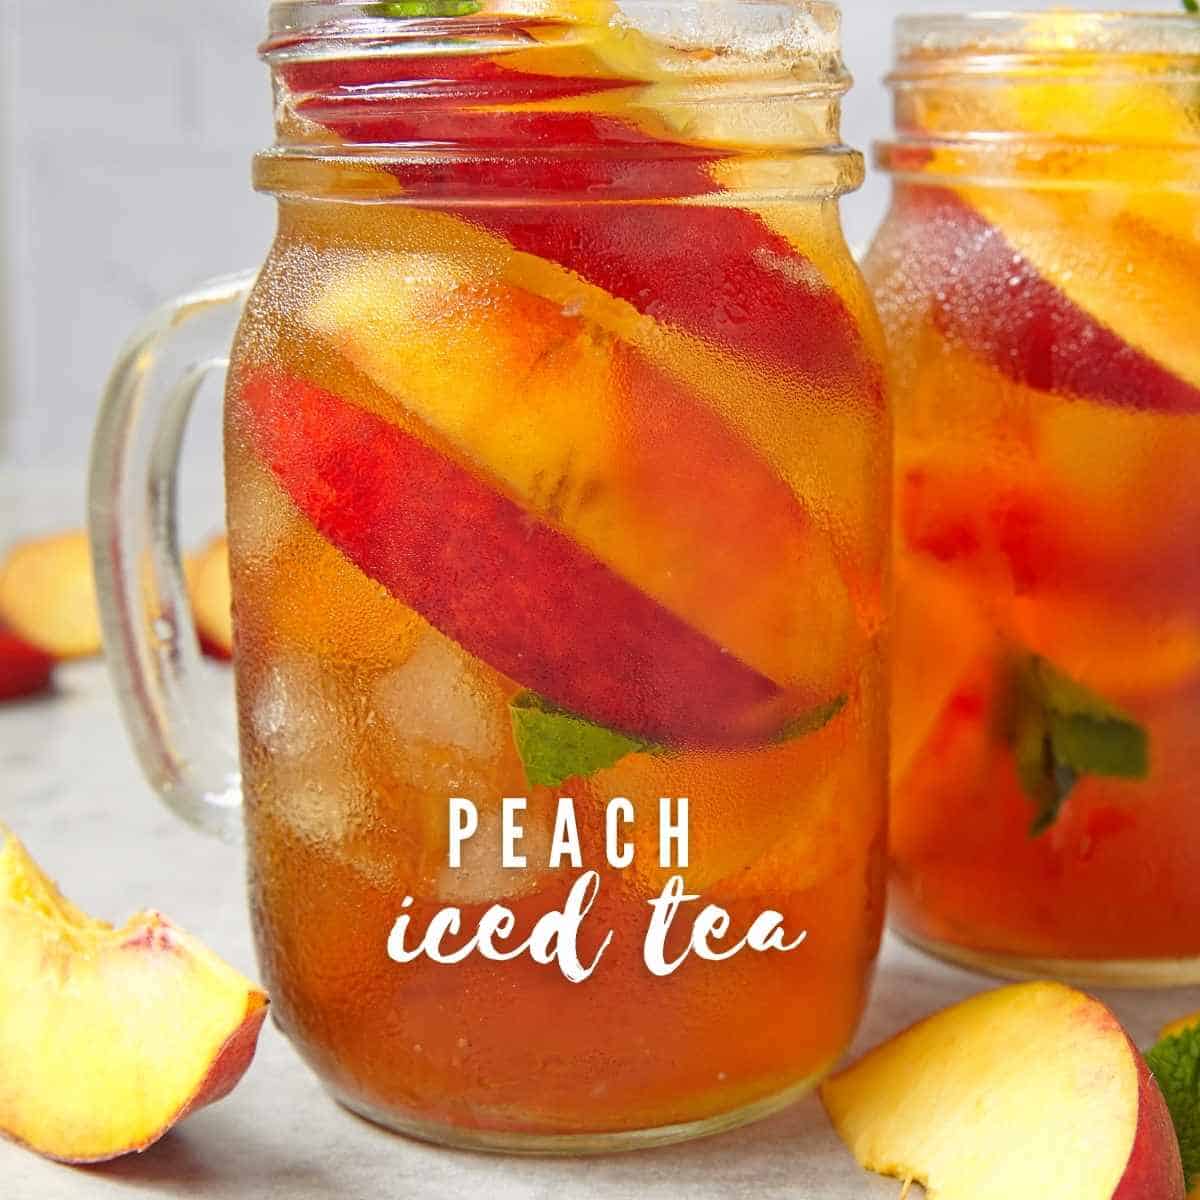 Peach Iced Tea from Scratch